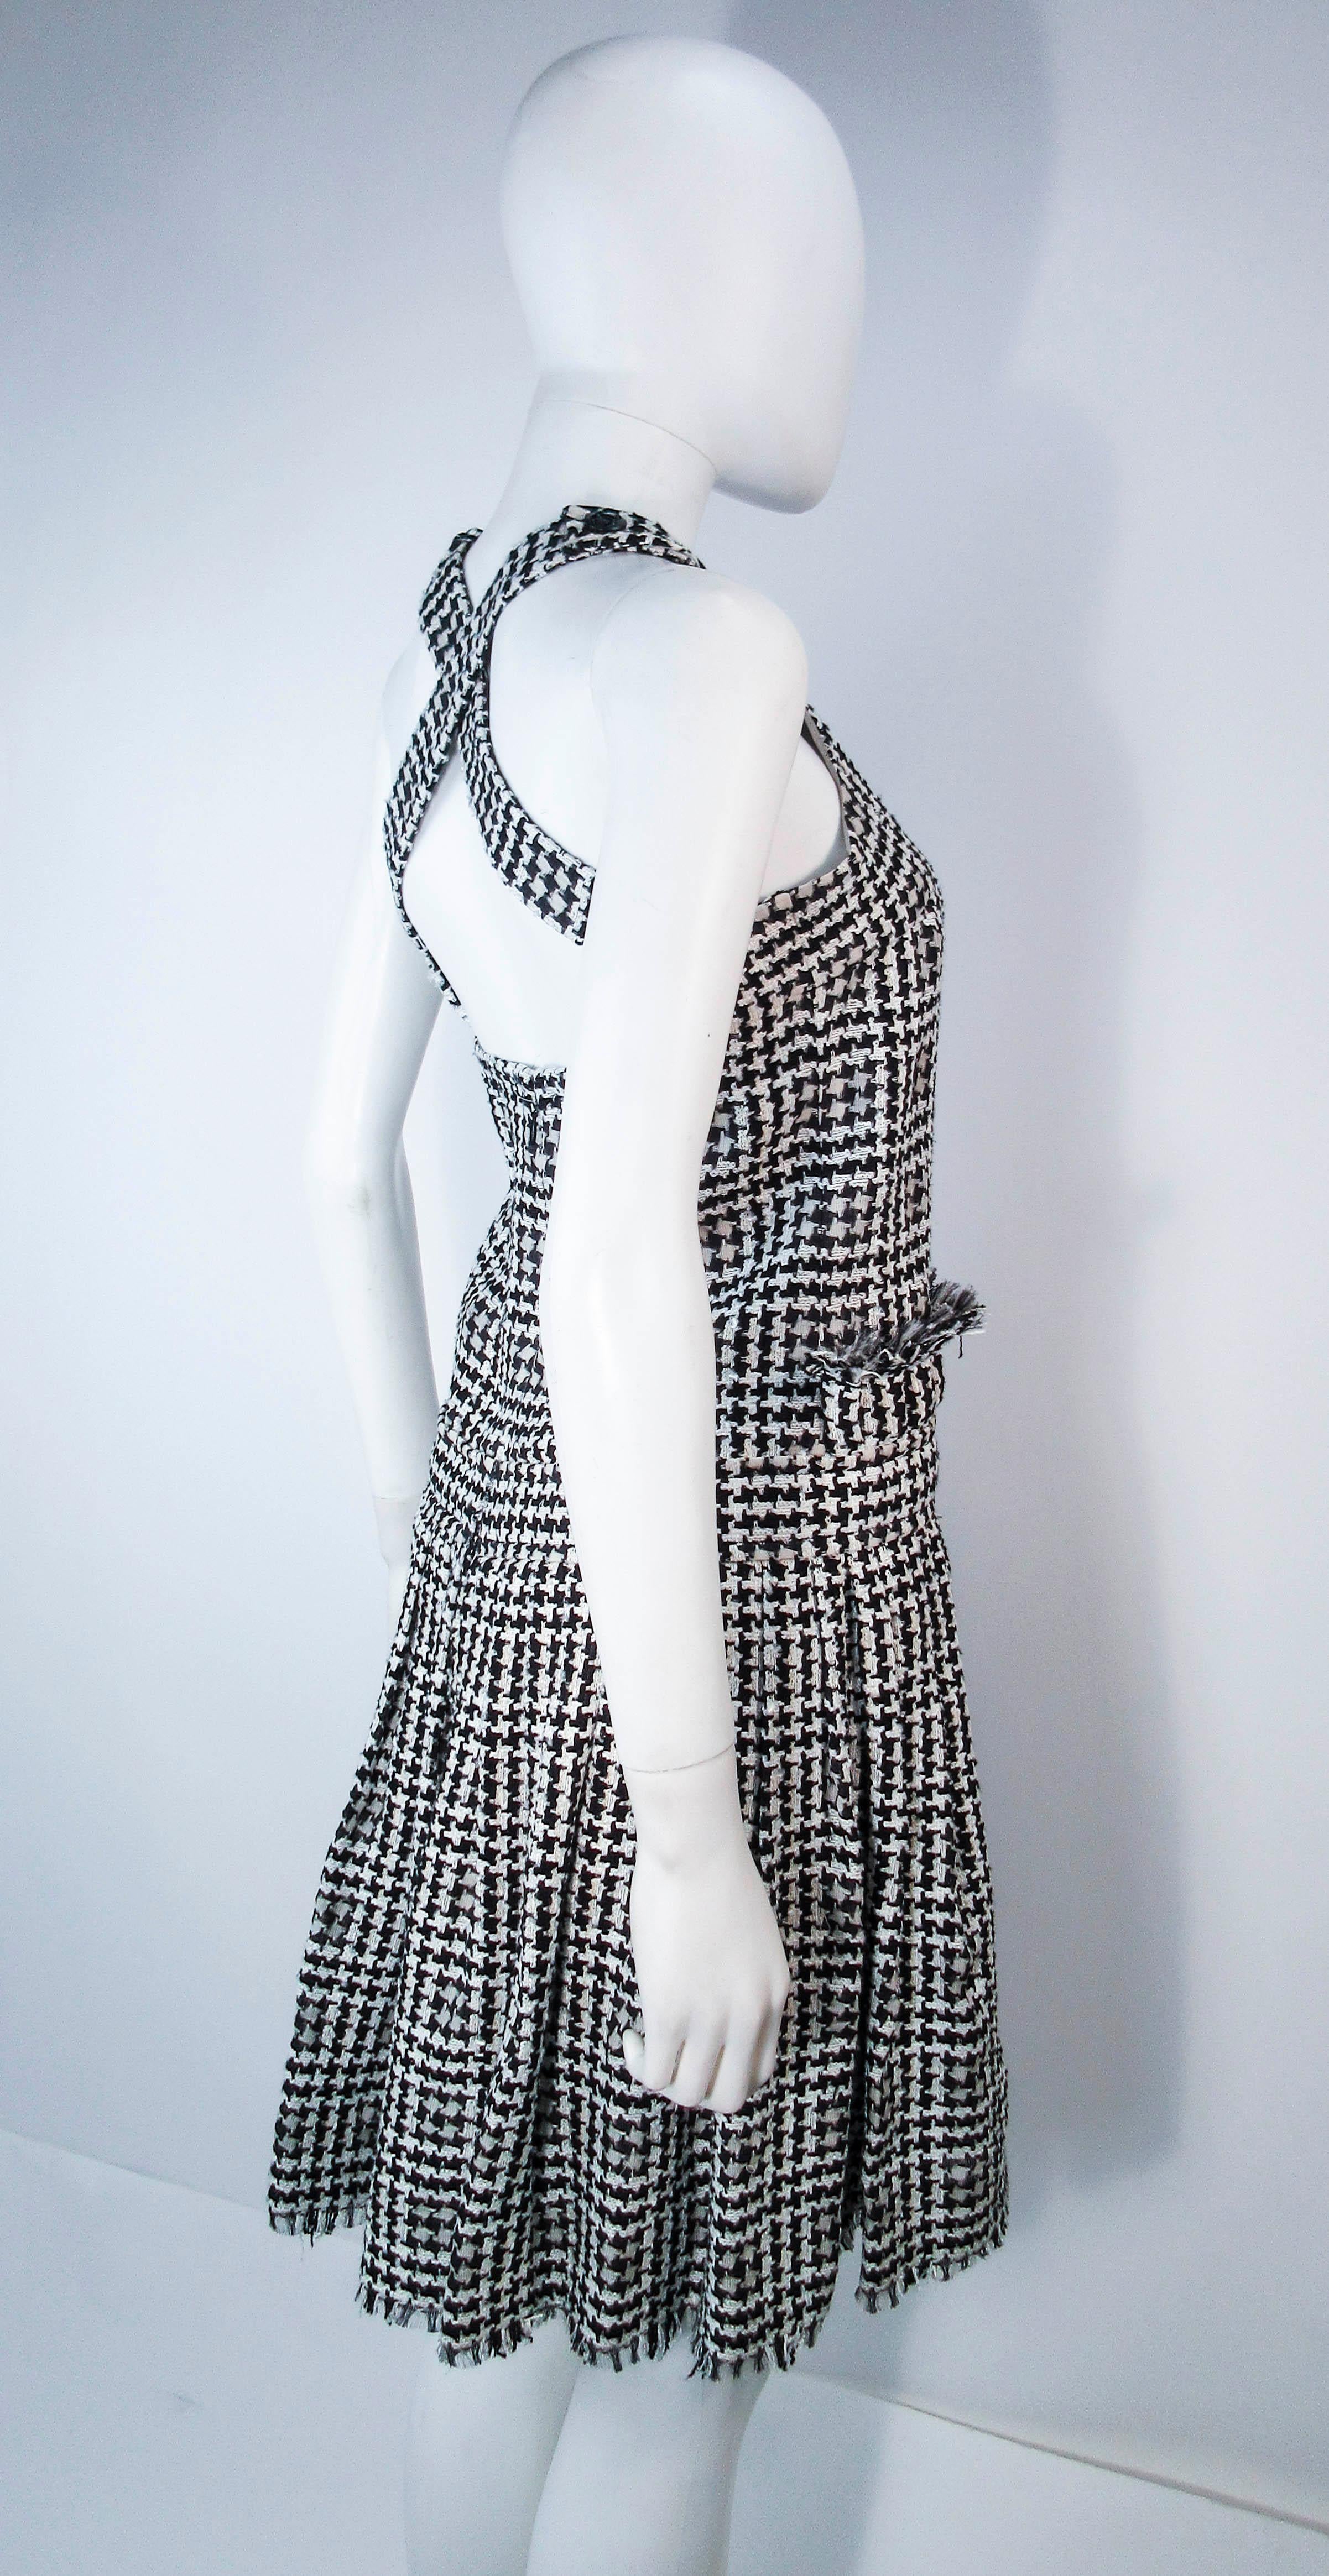 CHANEL Black & White Tweed Criss Cross Back Dress Size 36 3